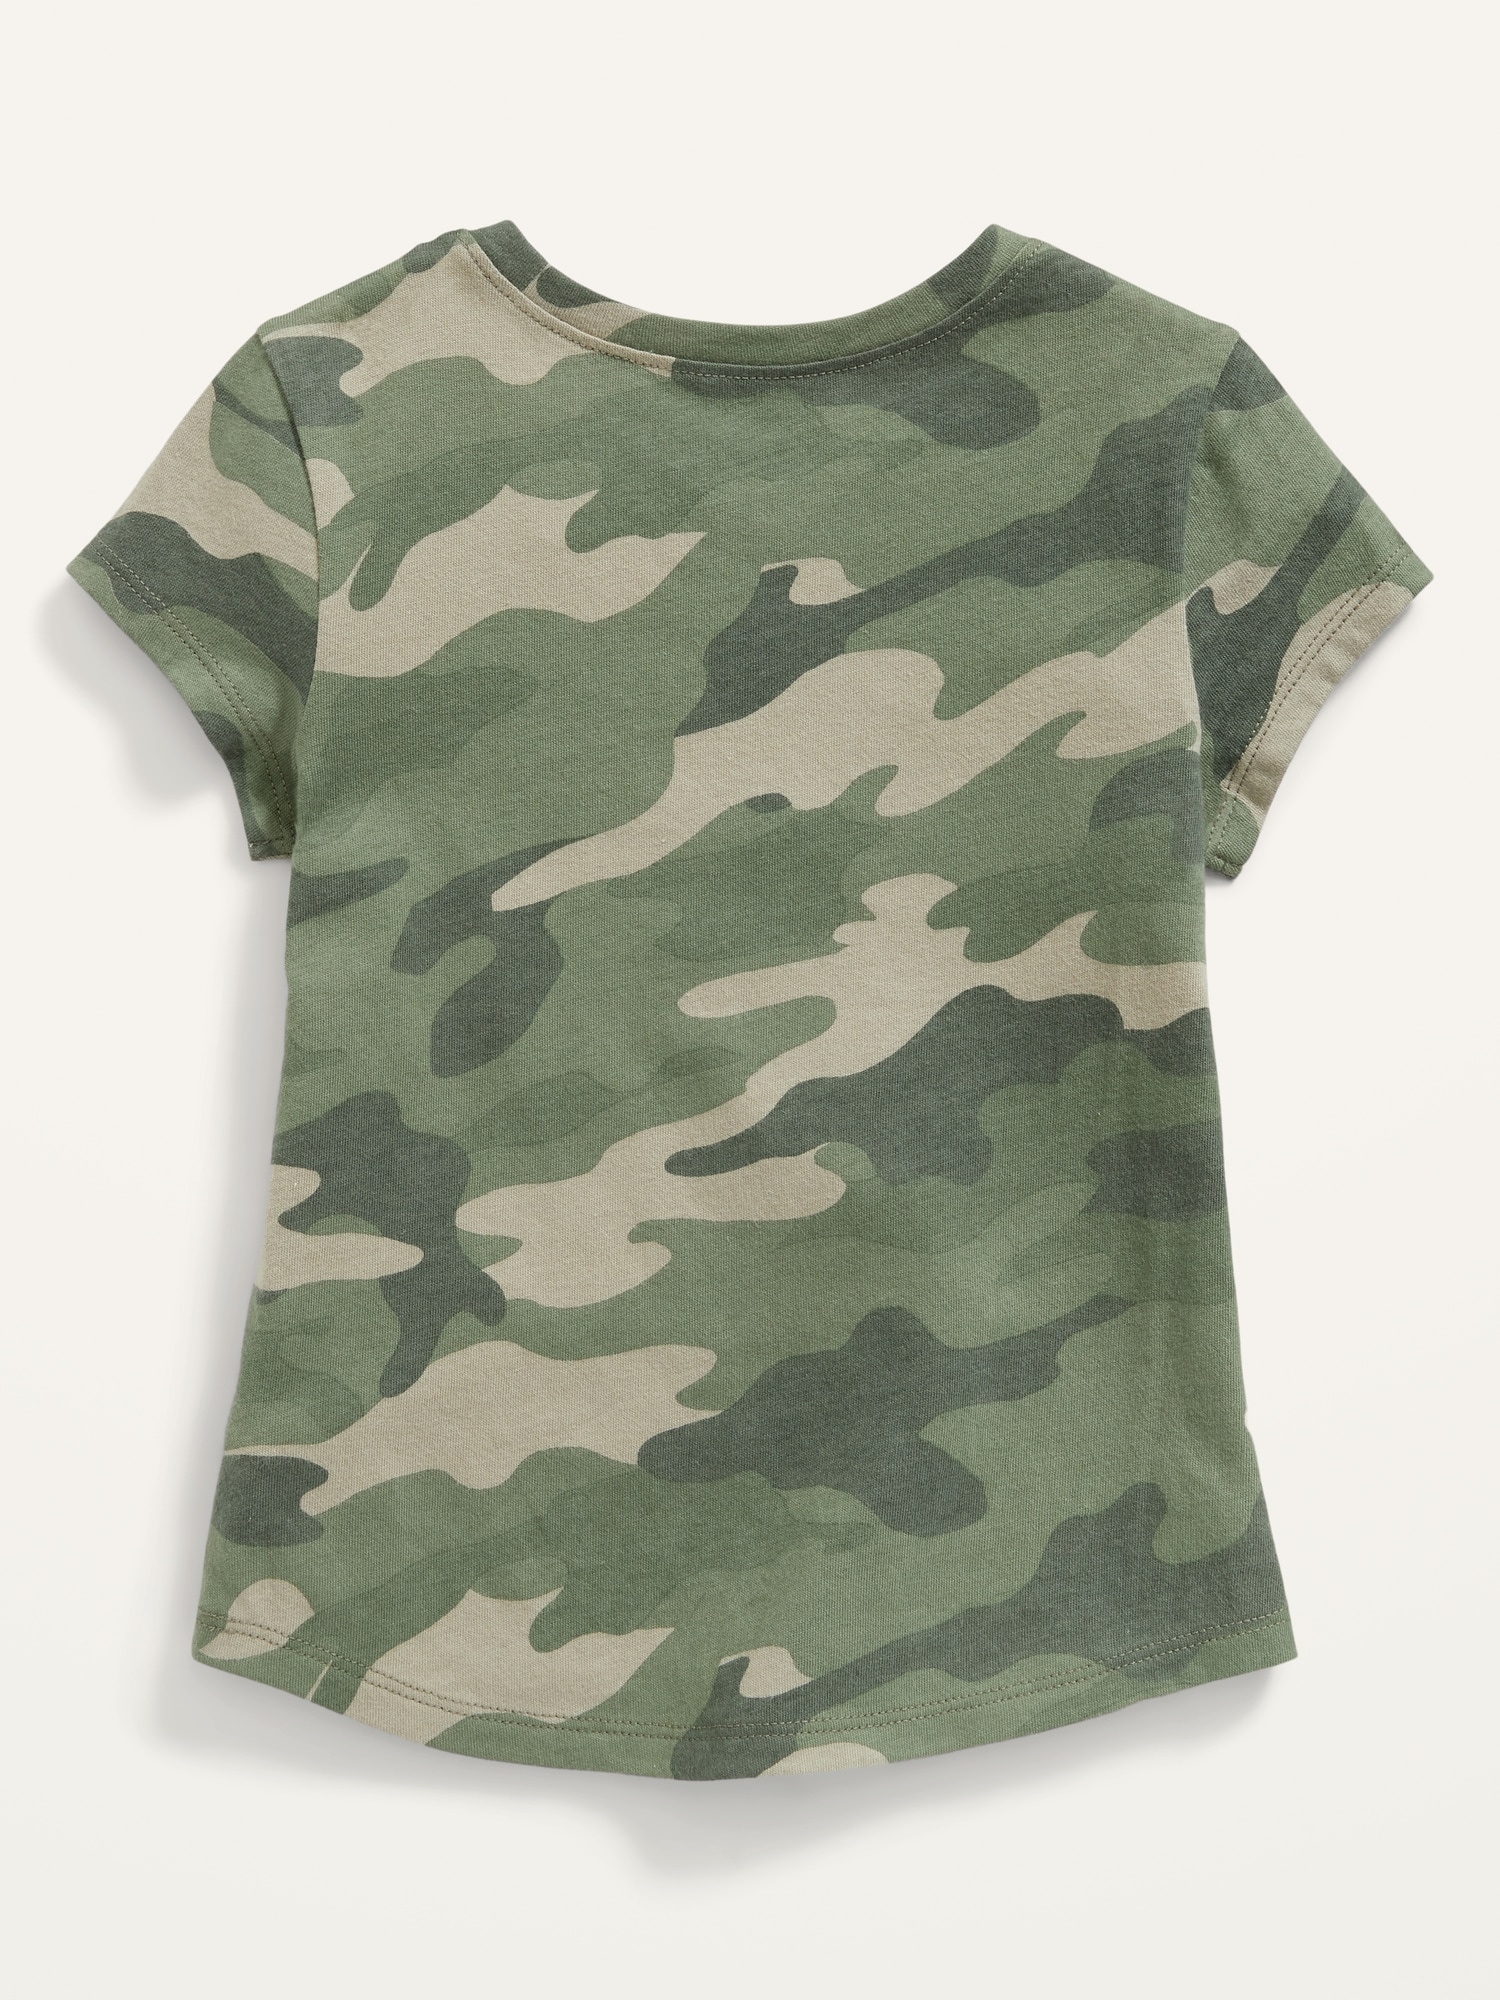 Unisex Short-Sleeve Camo T-Shirt for Toddler | Old Navy